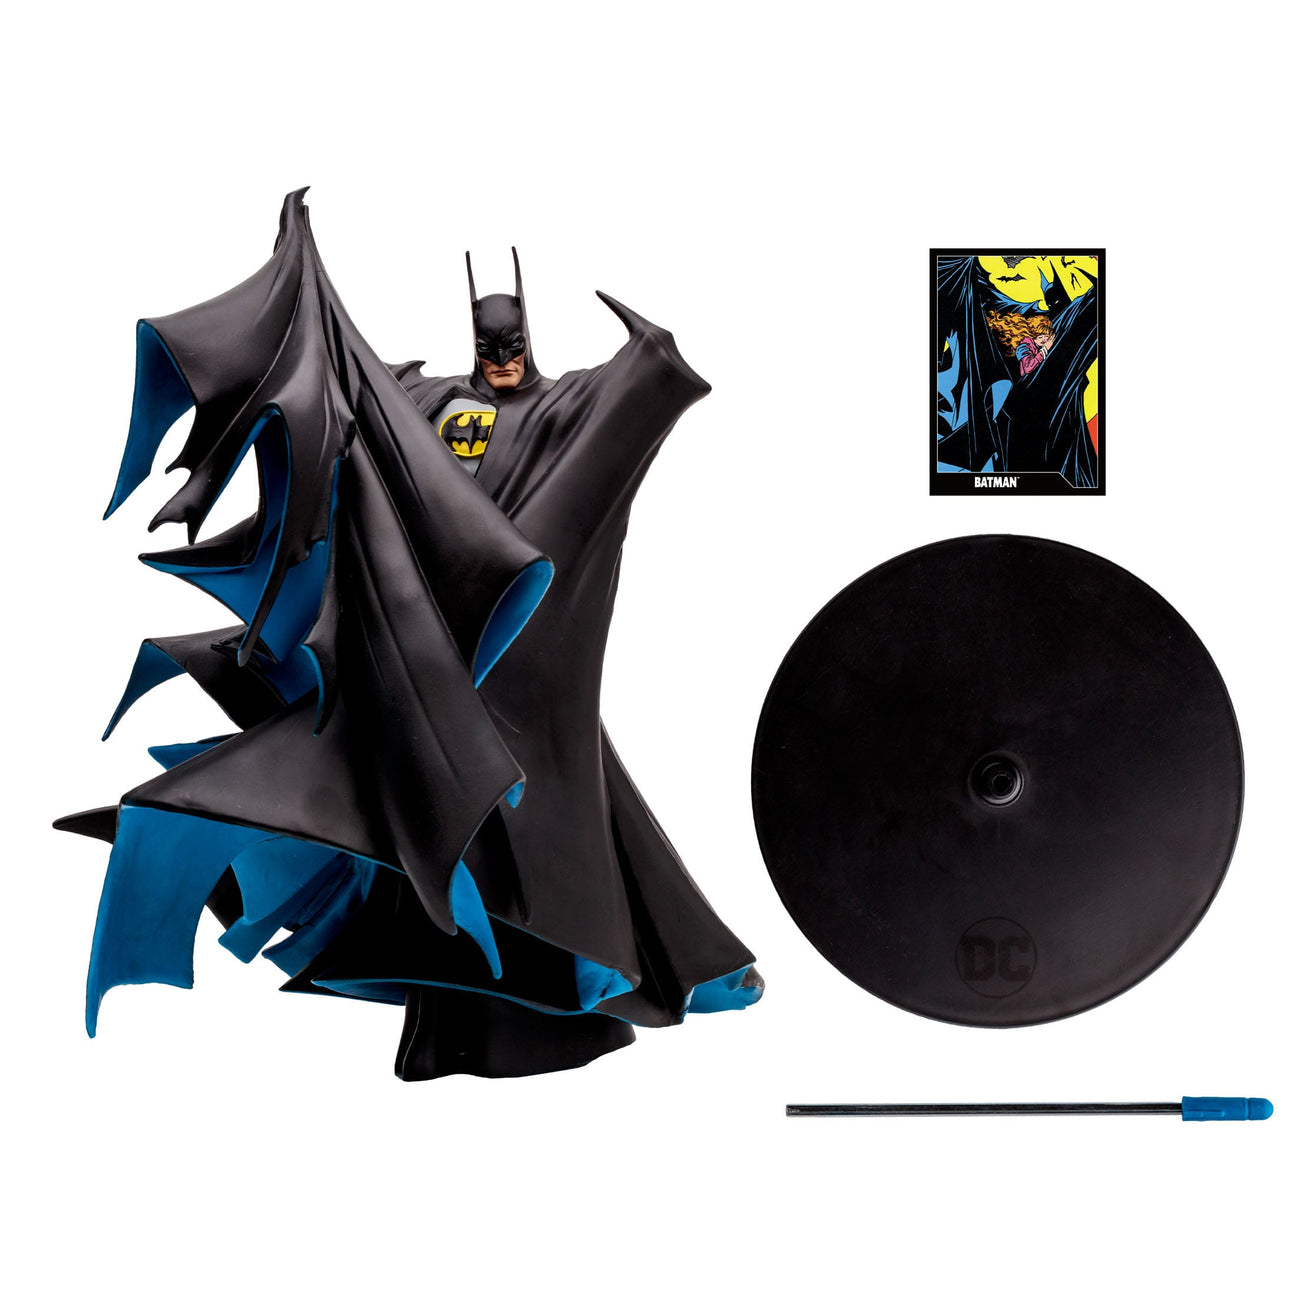 DC Direct: Batman by Todd - 30 cm Statue-Statue-McFarlane Toys-Mighty Underground